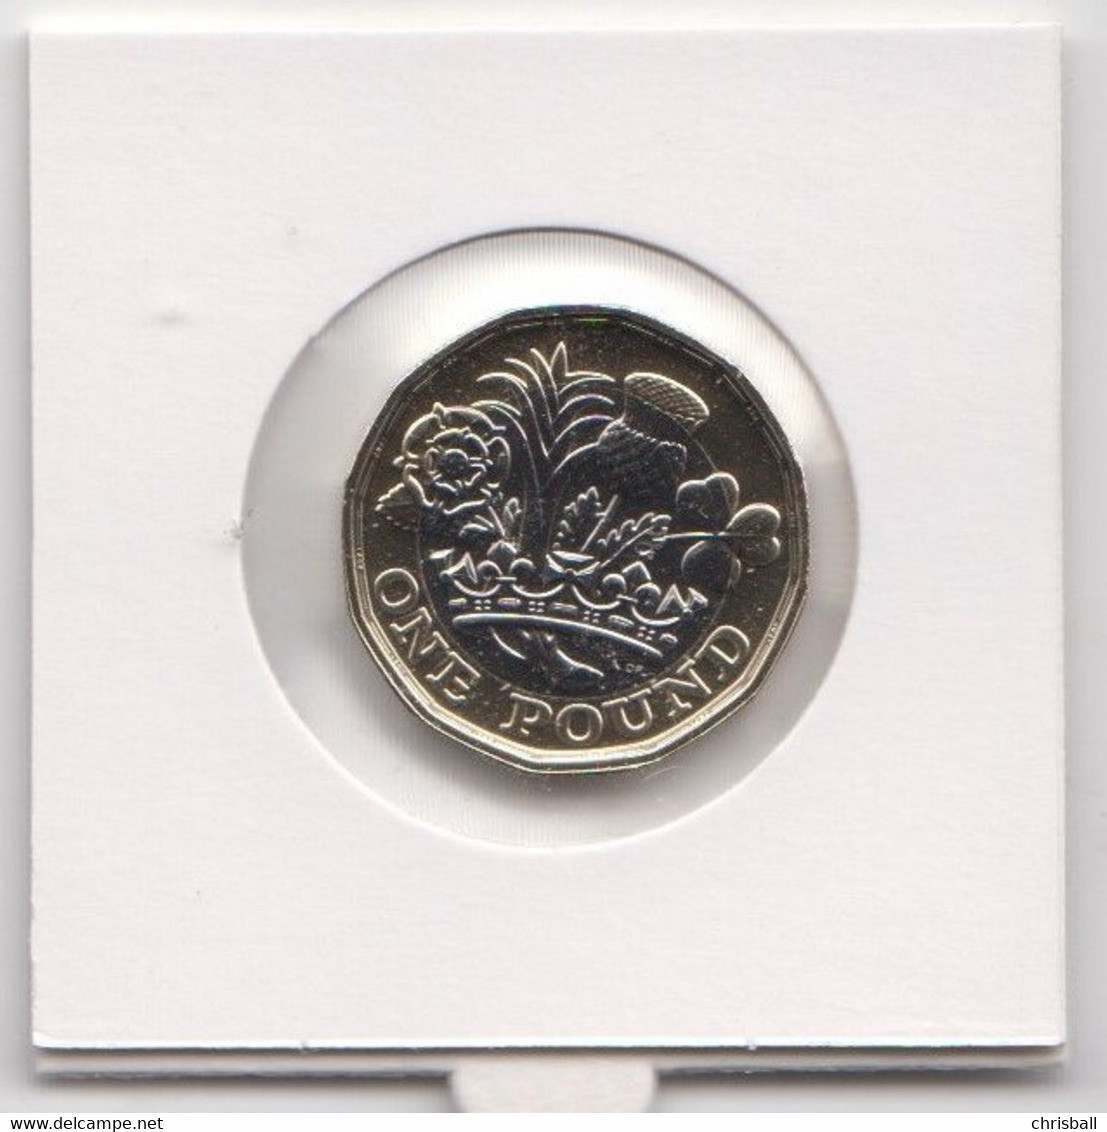 Great Britain UK £1 One Pound Coin 2021 (Britannia) - Uncirculated - 1 Pound